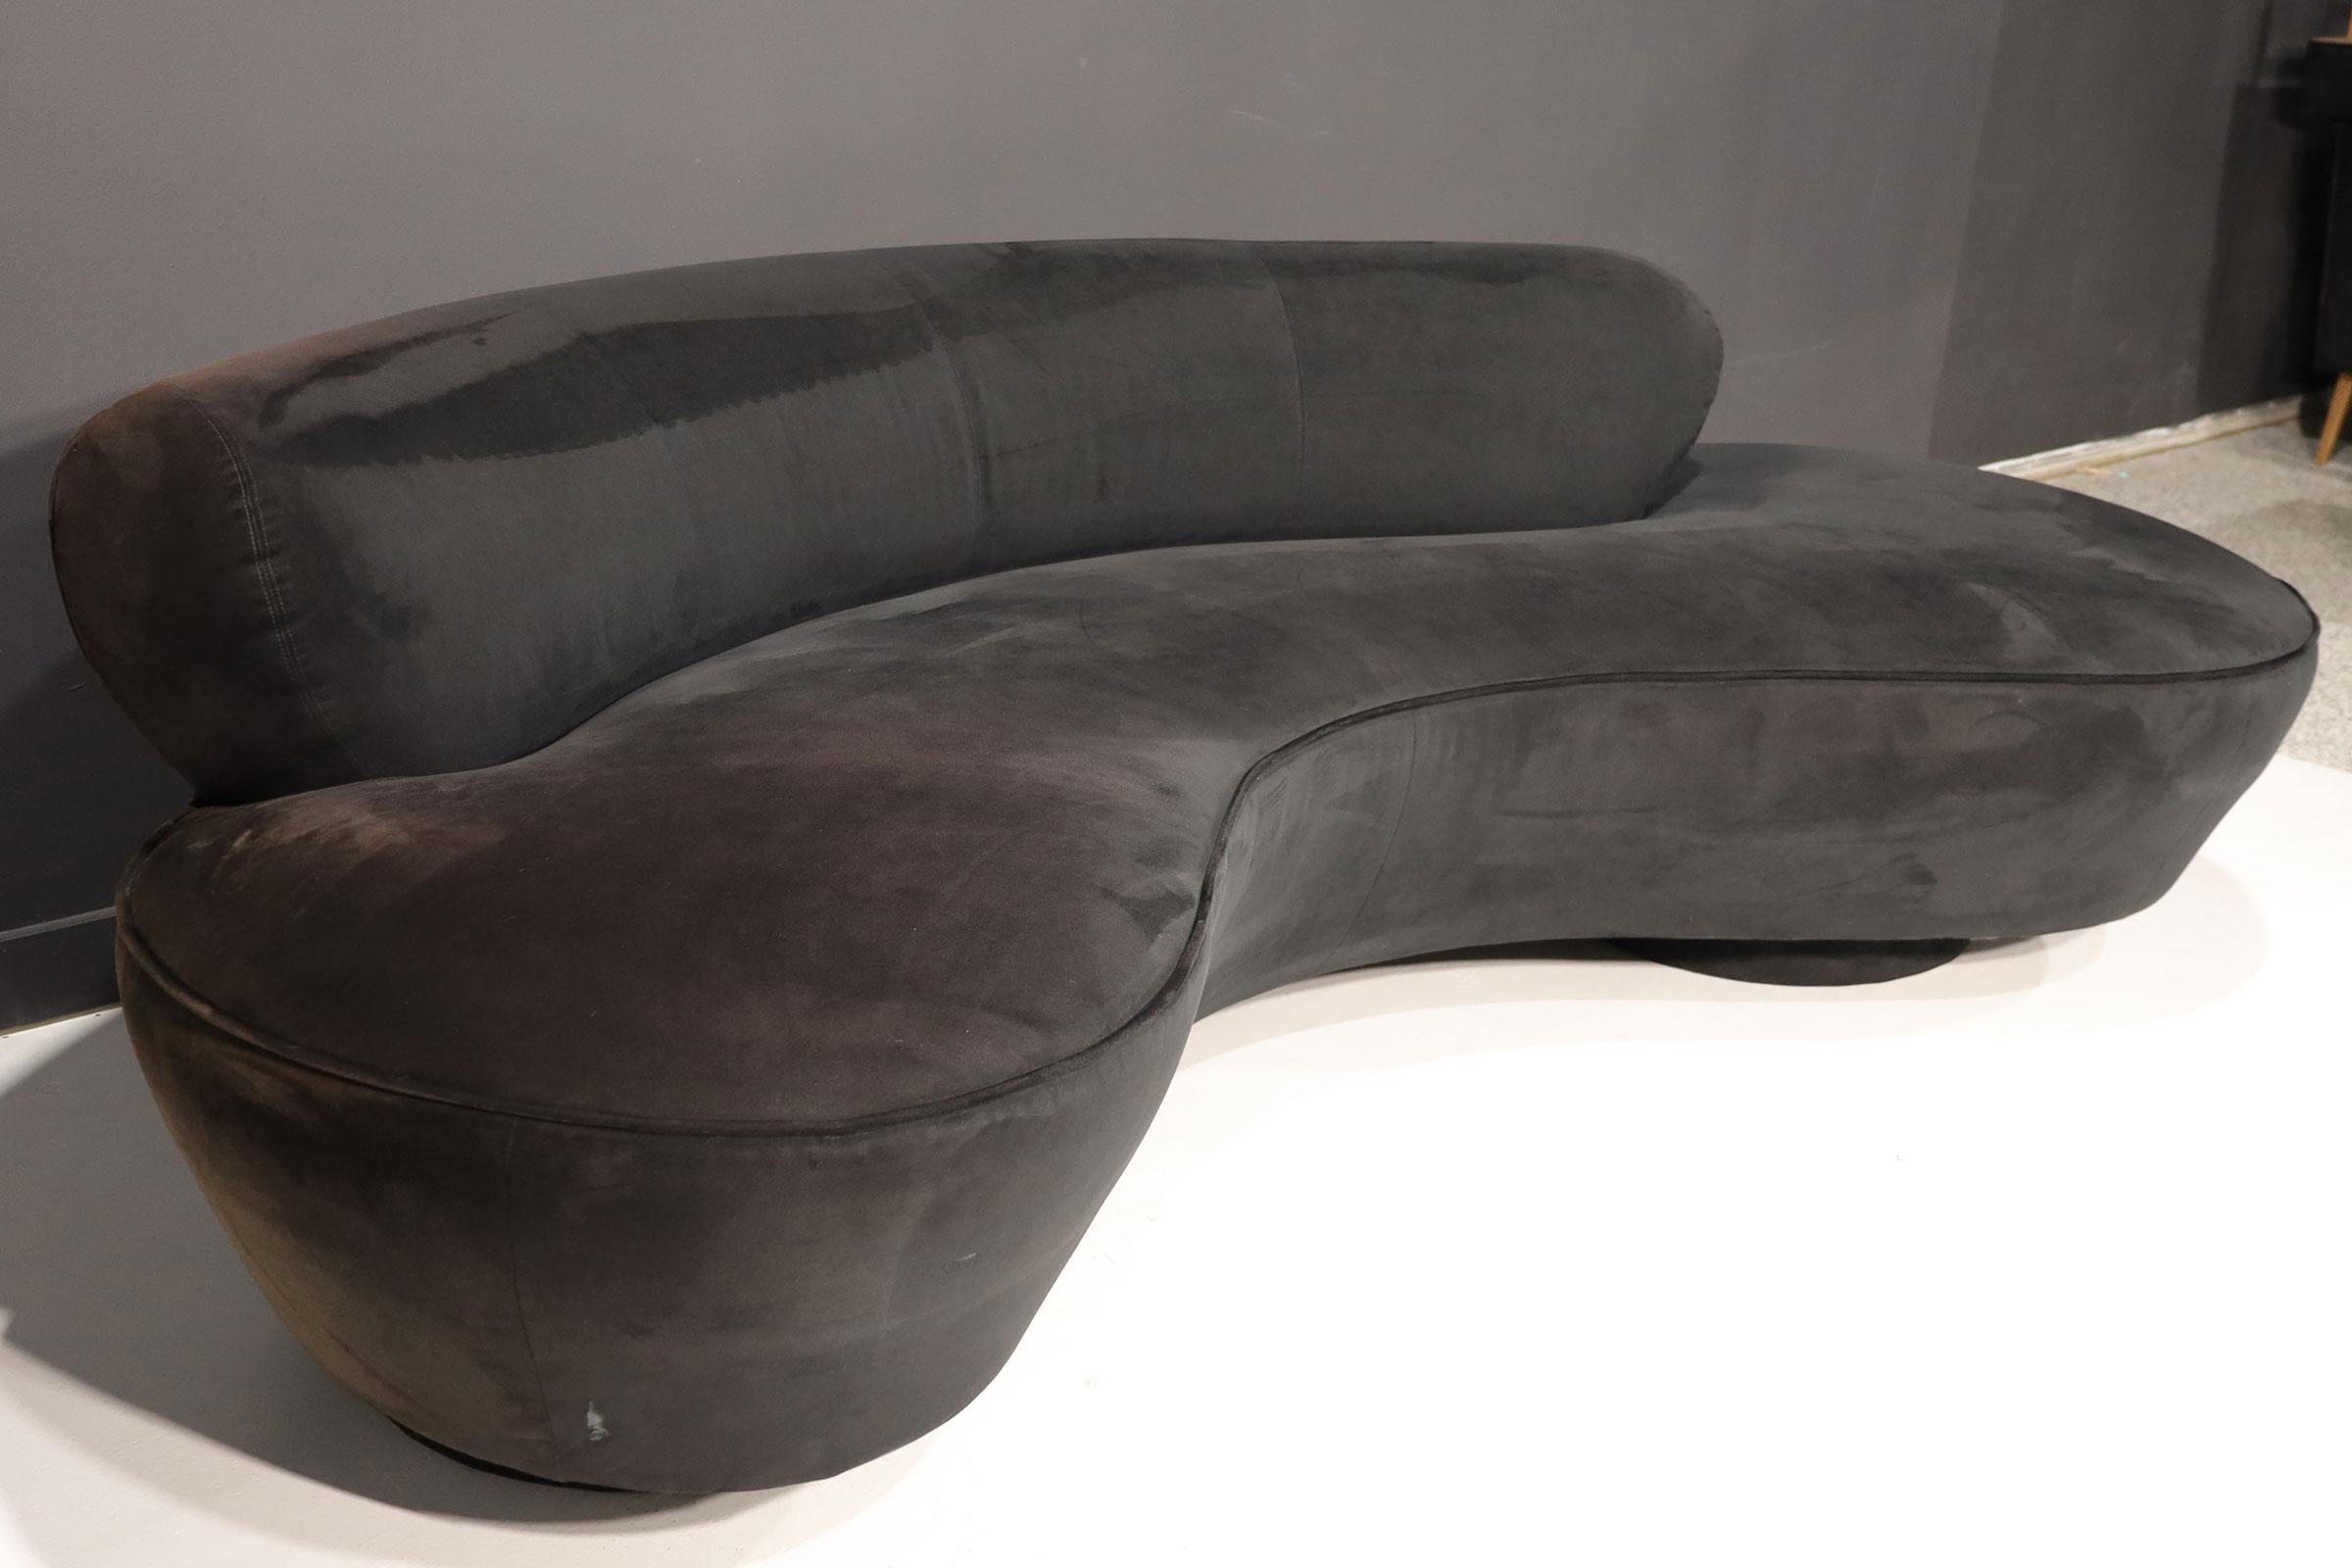 North American Vladimir Kagan Cloud Serpentine Sofa by Directional in Black Microfiber